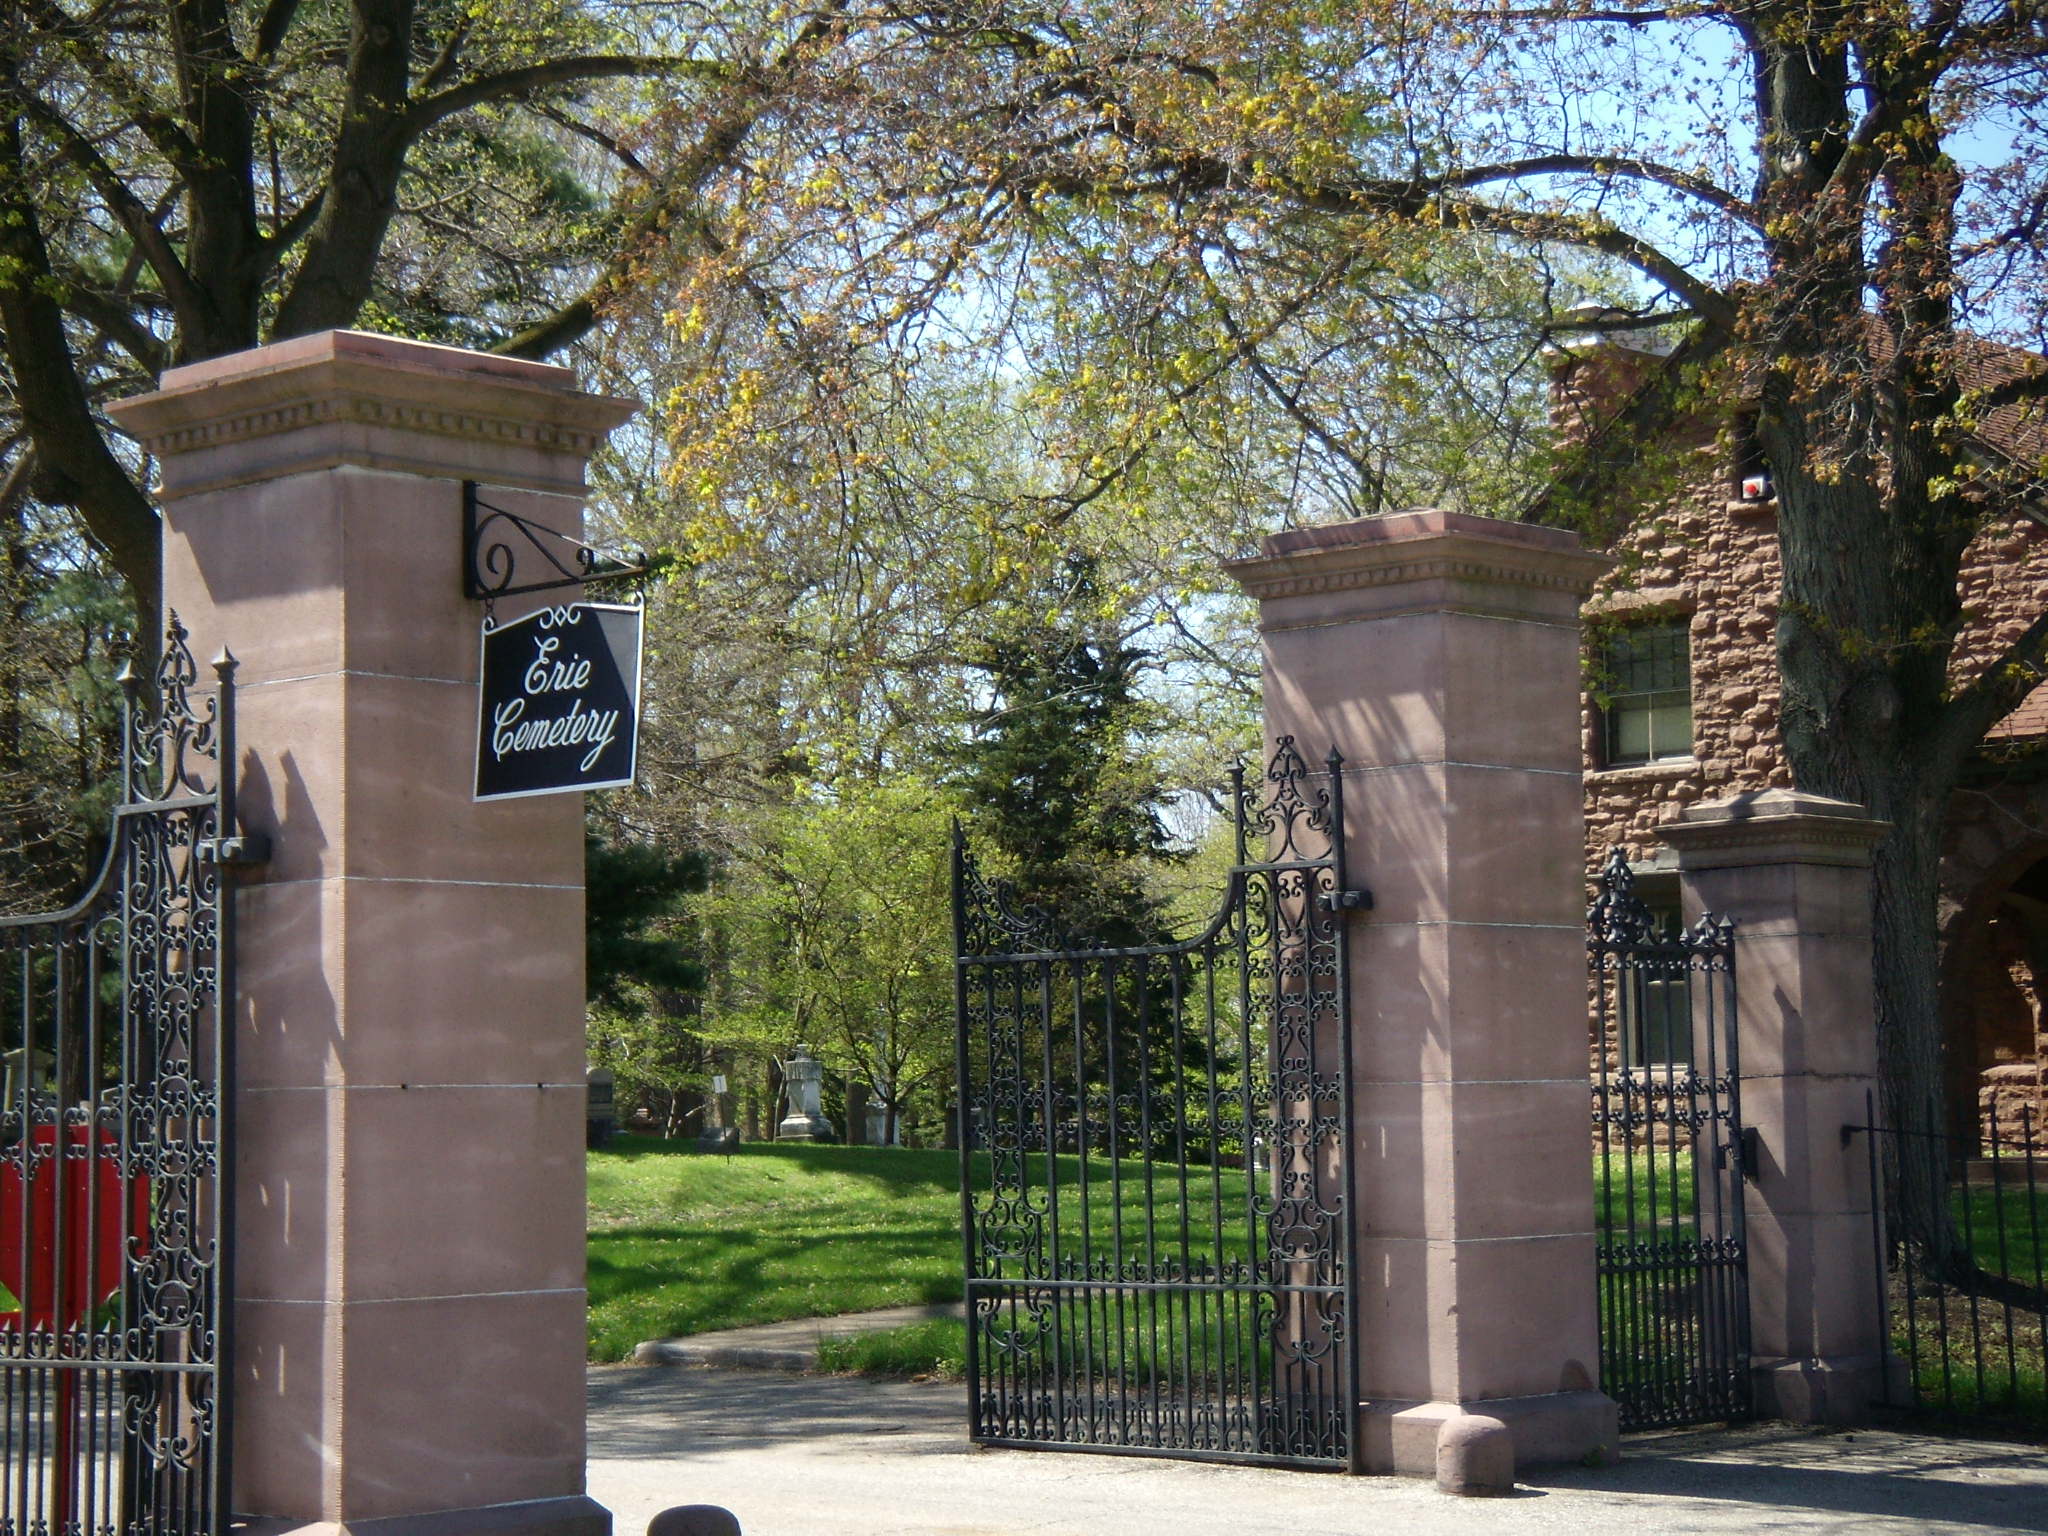 File:Erie Cemetery gate.jpg - Wikimedia Commons